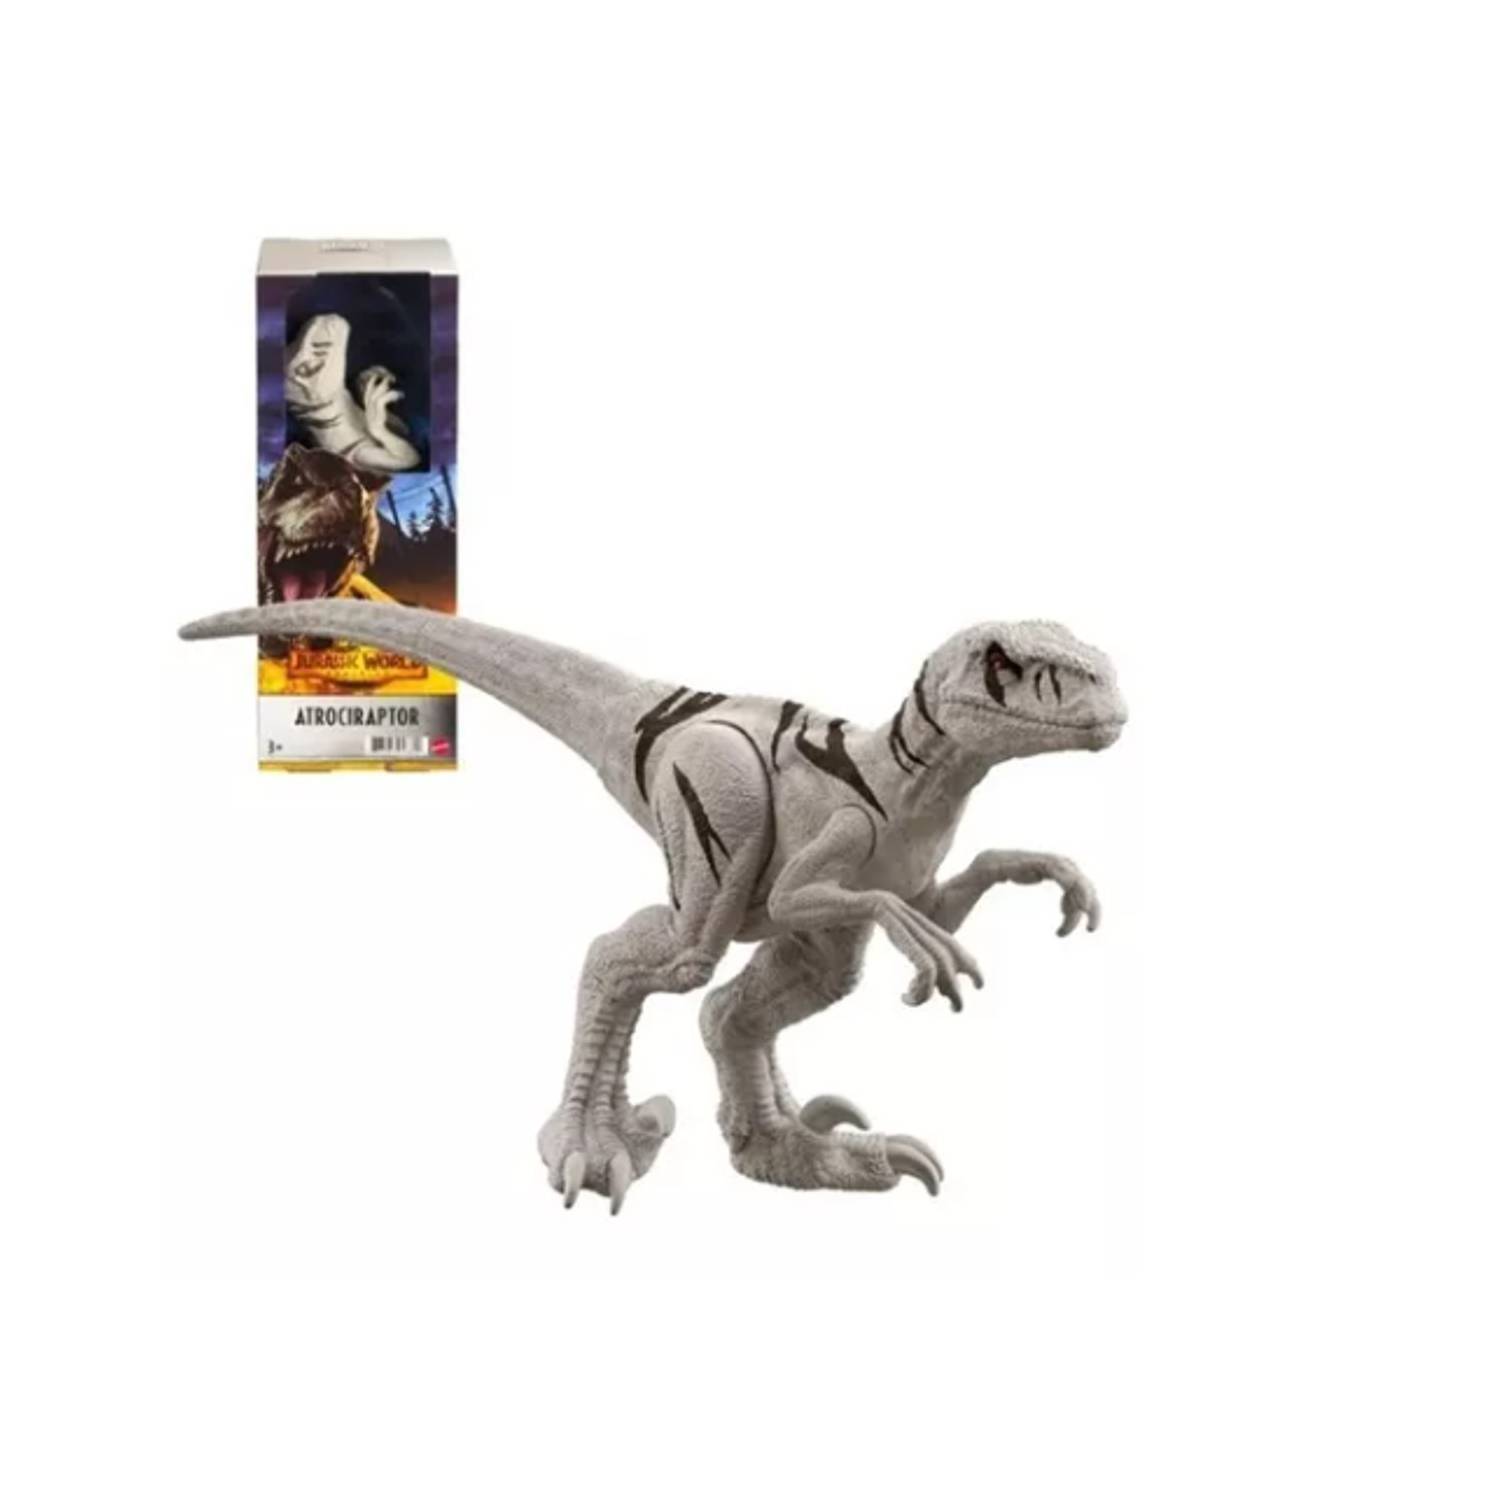 MATTEL Jurassic World Figura Básica Dinosaurios - Atrociraptor |  